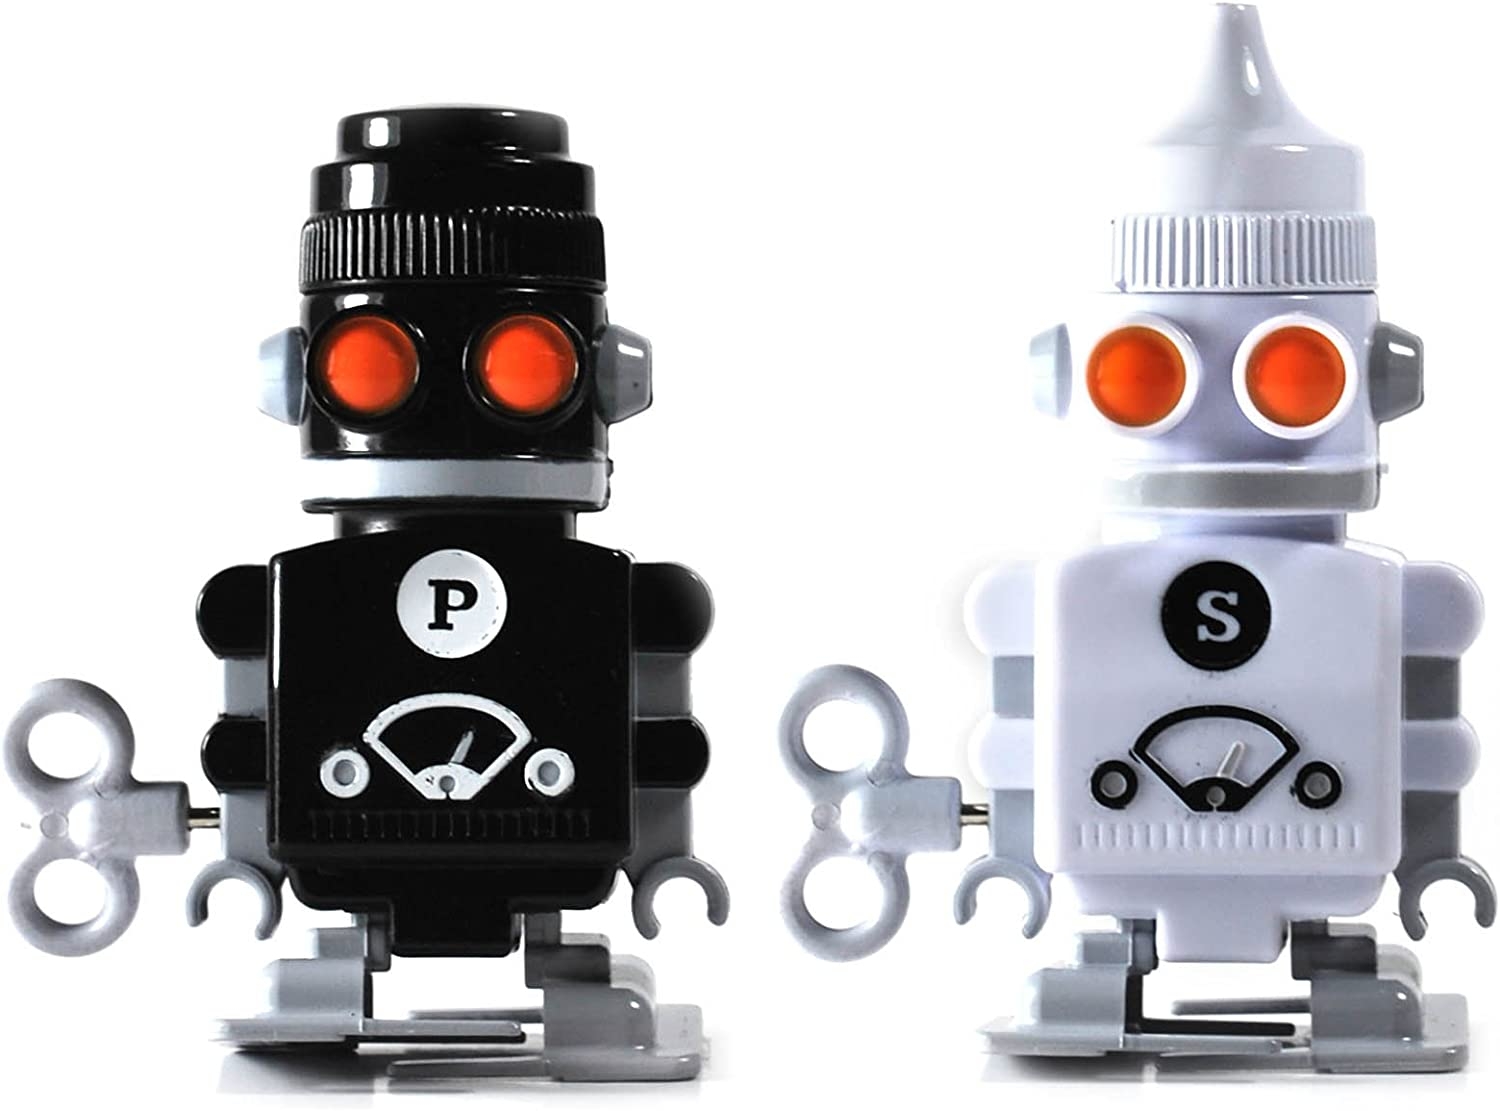 SUCK UK Wind-up Robot Salt & Pepper Shakers Import To Shop ×Product customization General Description Gallery Reviews